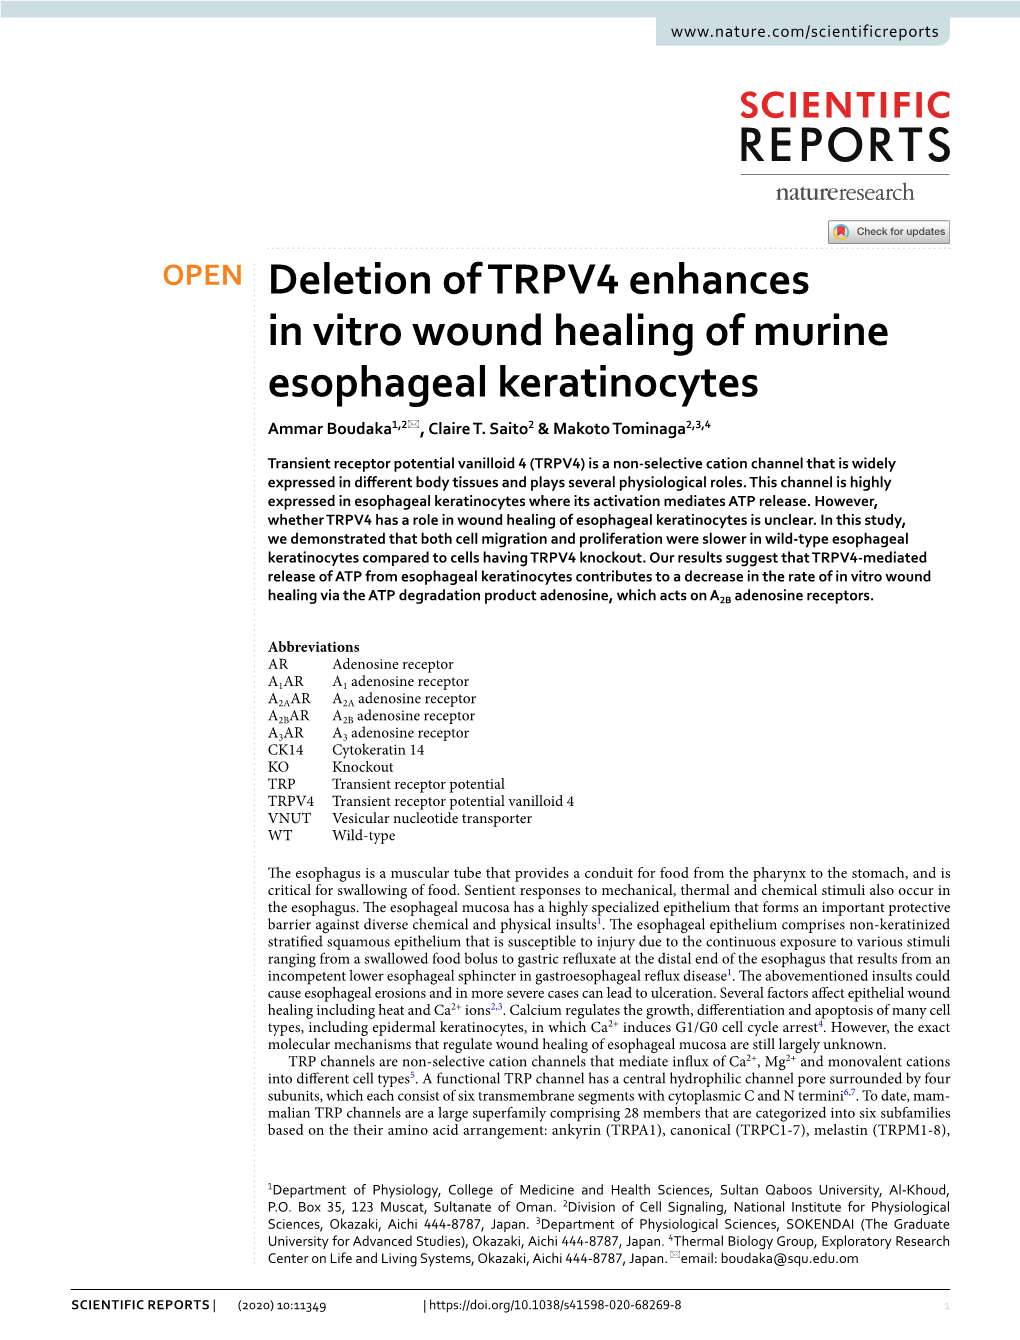 Deletion of TRPV4 Enhances in Vitro Wound Healing of Murine Esophageal Keratinocytes Ammar Boudaka1,2*, Claire T